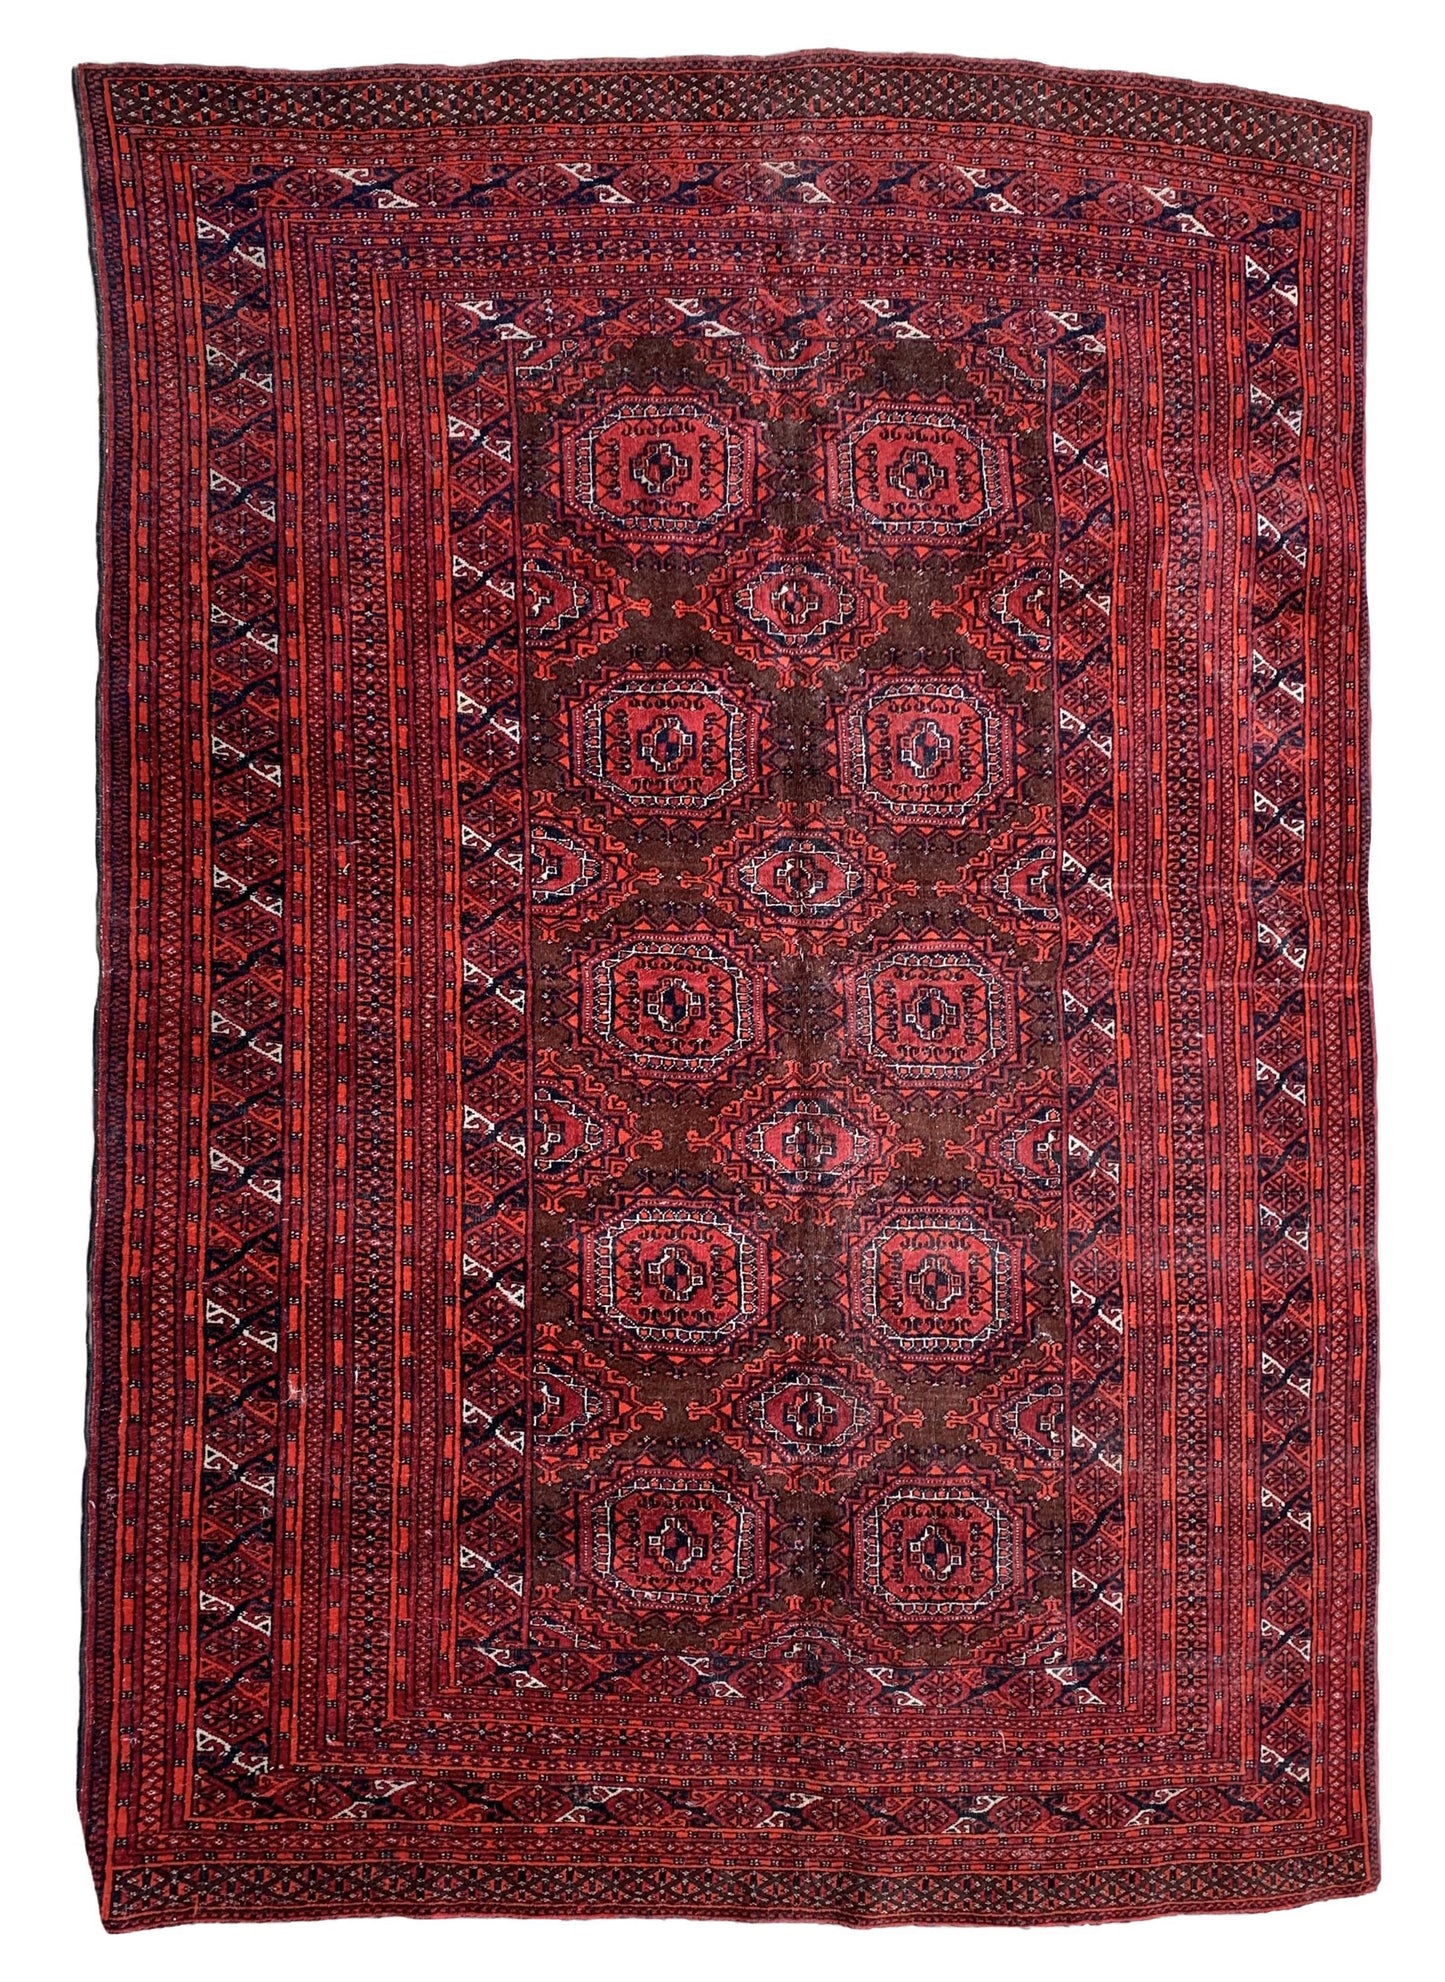 Handmade Vintage Uzbek Bukhara Rug from the 1960s in original good condition